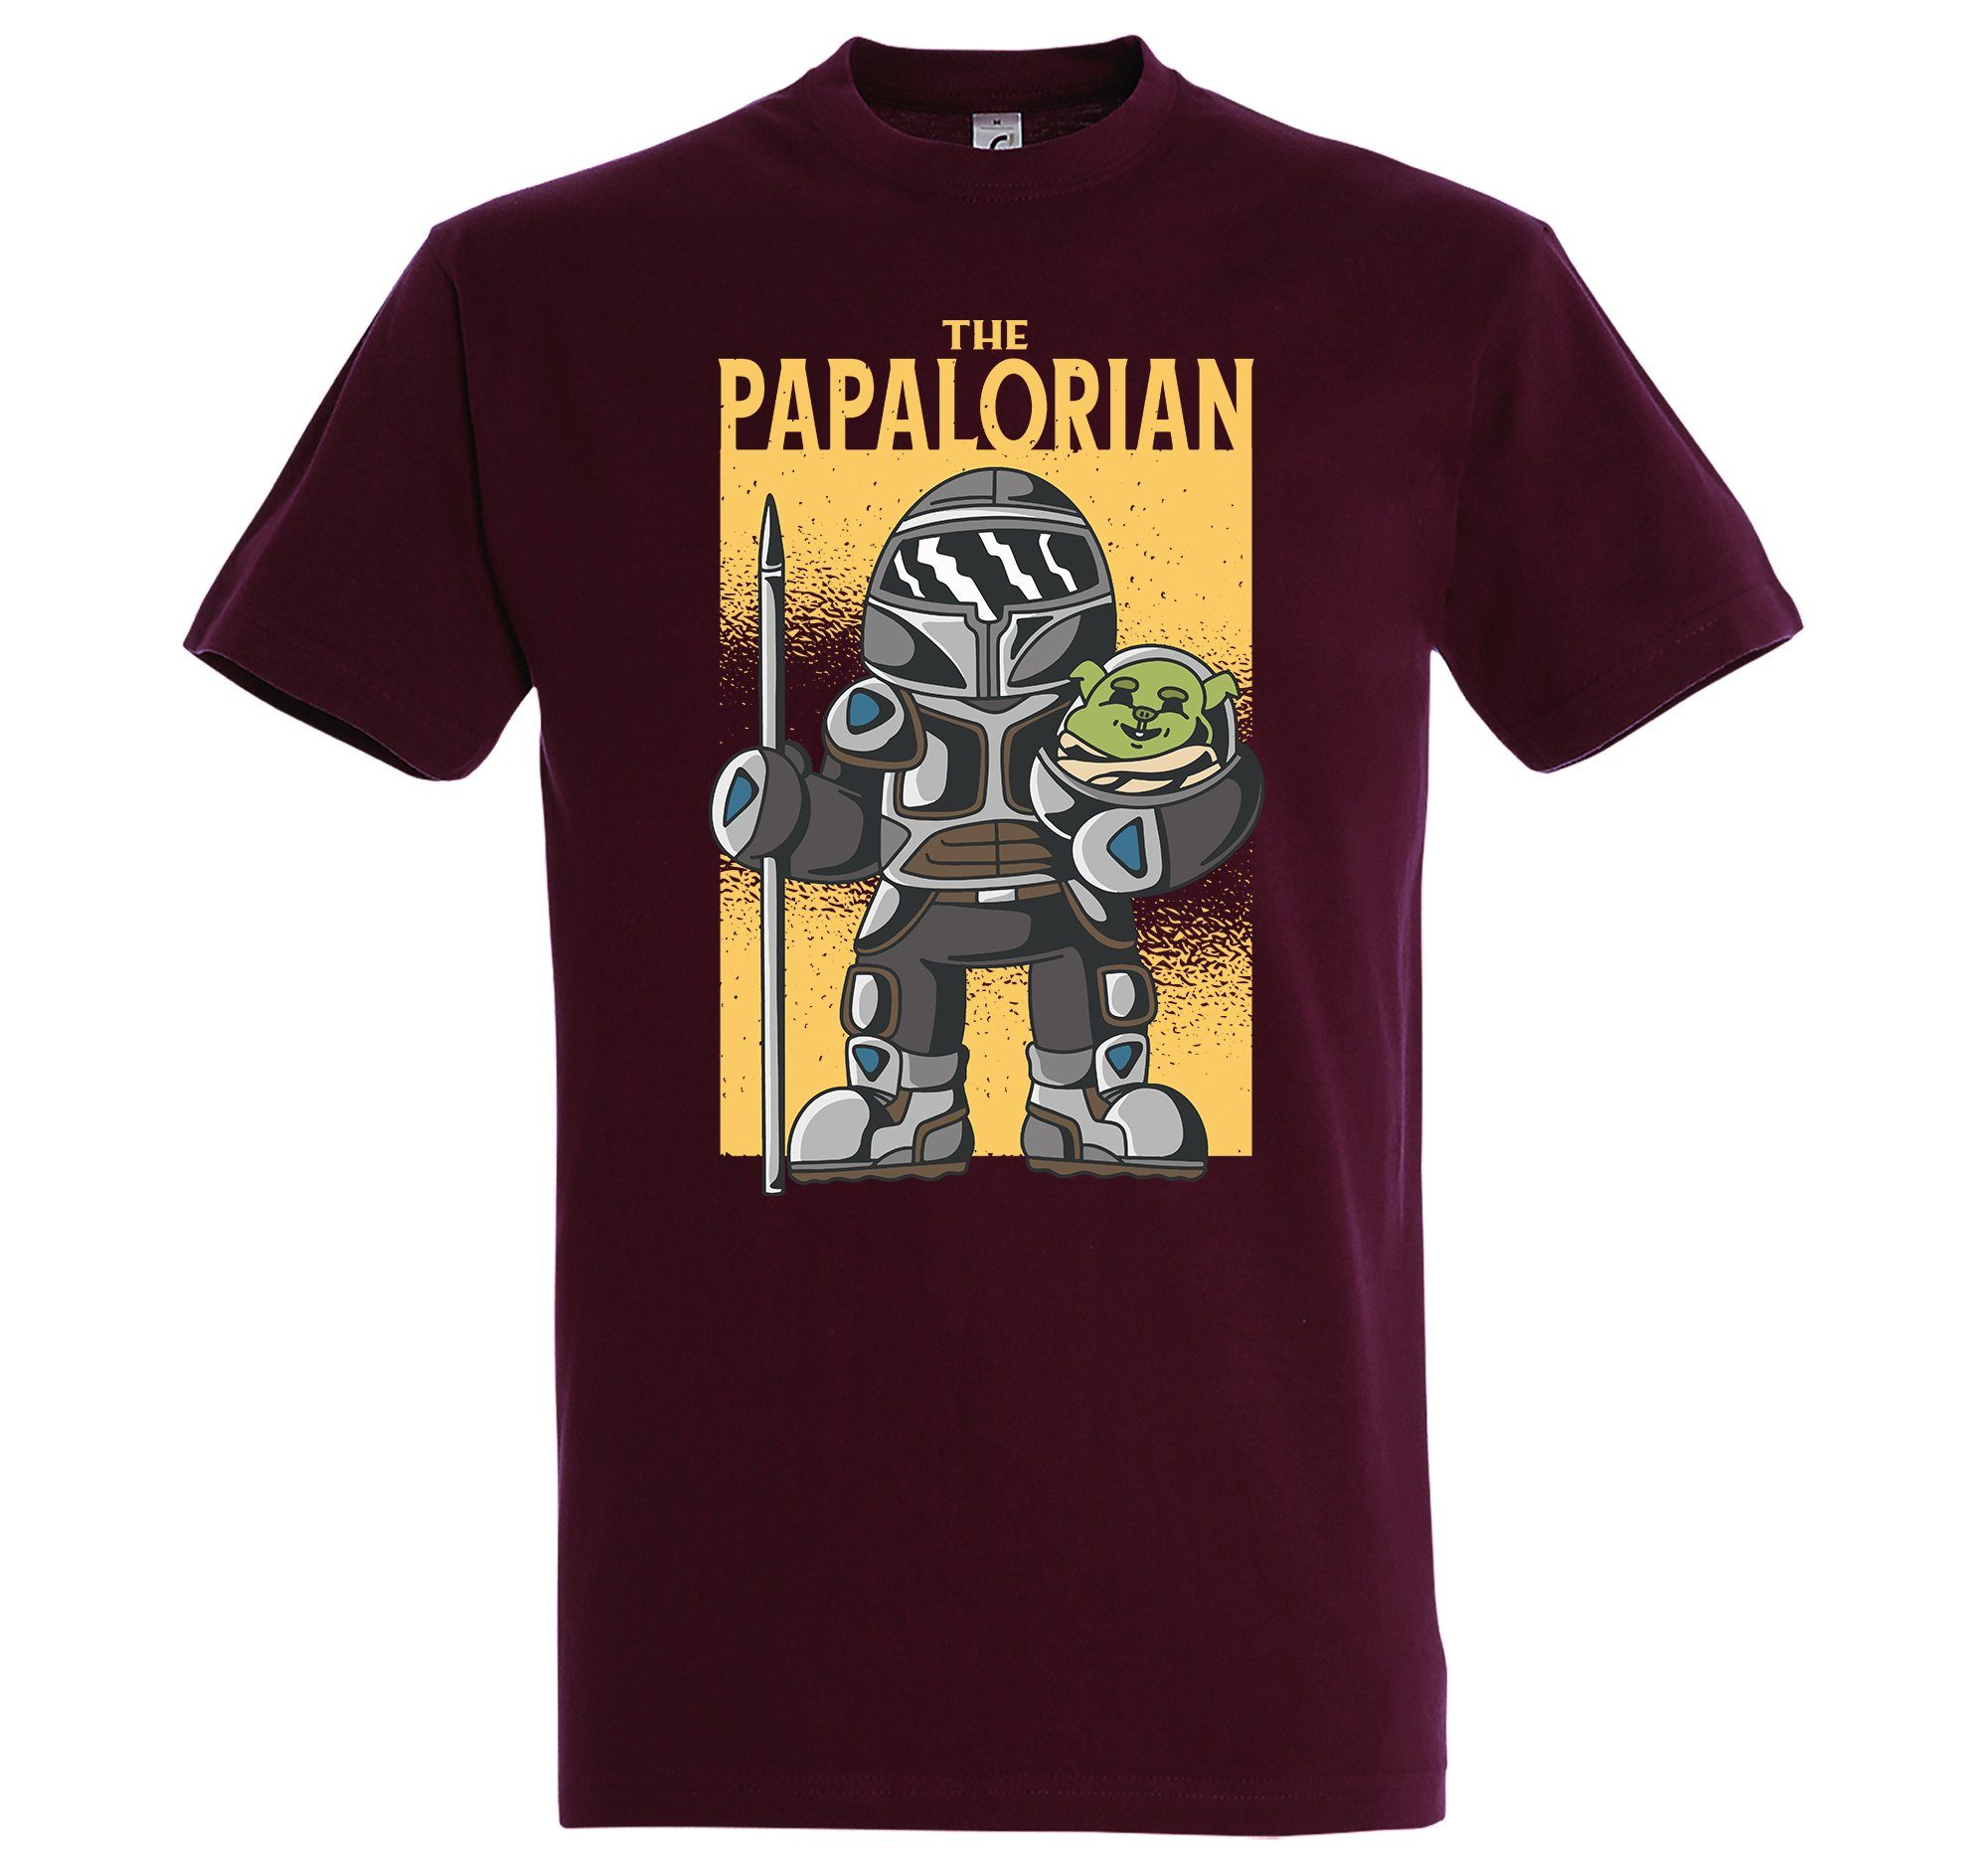 T-Shirt Designz Herren Frontprint Shirt mit Papalorian Burguns Youth trendigem